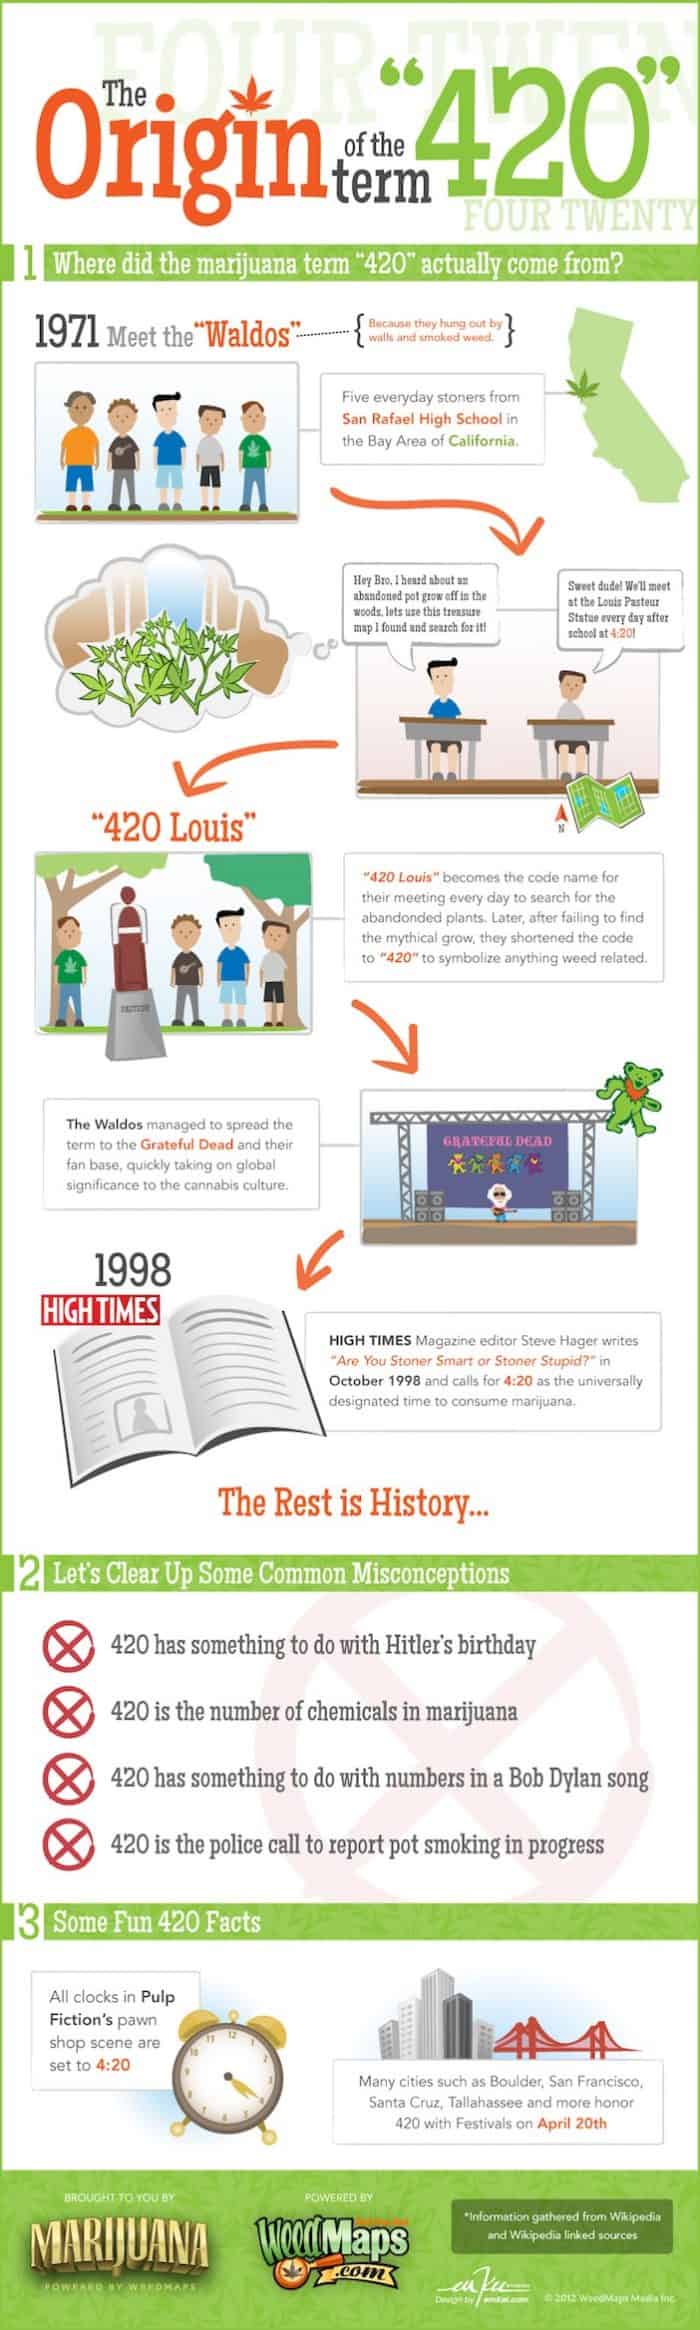 Origin of the term 420 infographic